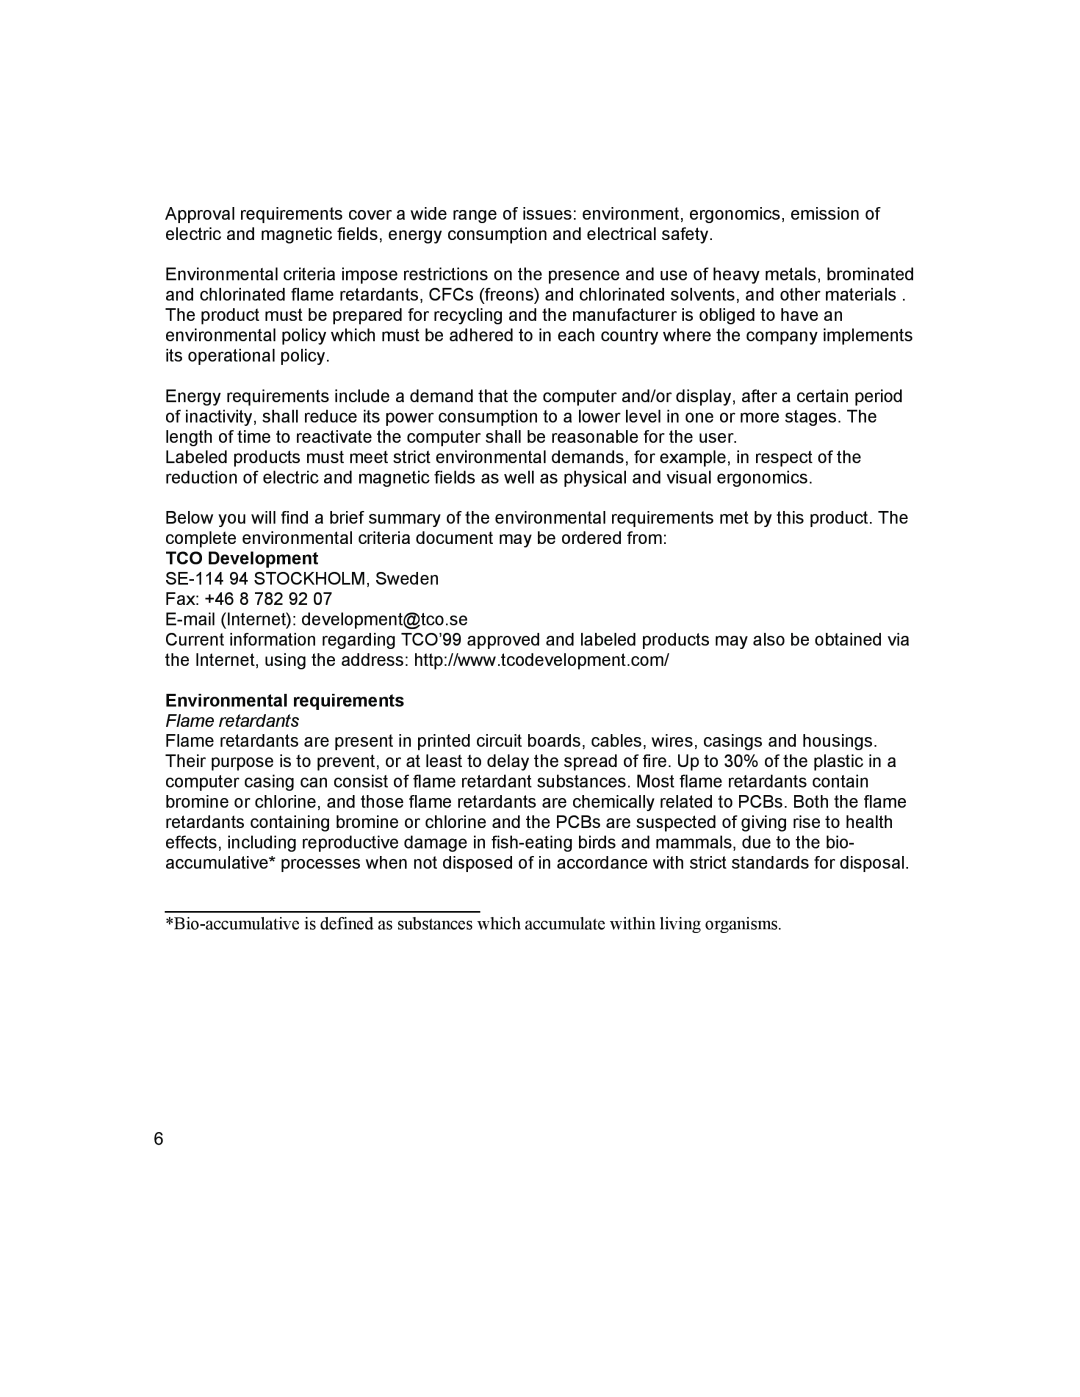 IBM T541A manual TCO Development, Environmental requirements 